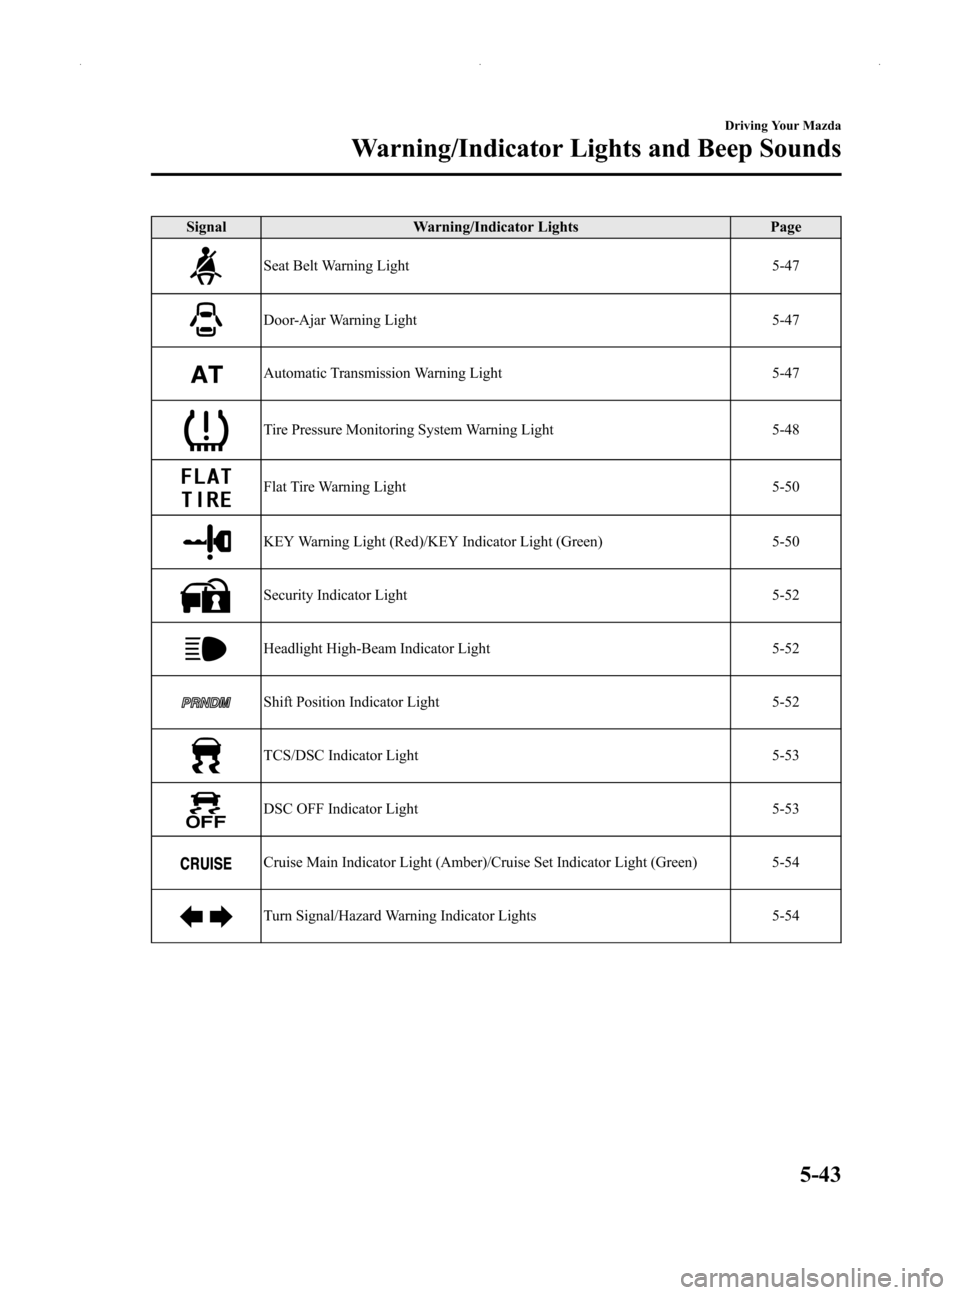 MAZDA MODEL MX-5 2014  Owners Manual (in English) Black plate (187,1)
SignalWarning/Indicator Lights Page
Seat Belt Warning Light 5-47
Door-Ajar Warning Light5-47
Automatic Transmission Warning Light5-47
Tire Pressure Monitoring System Warning Light5